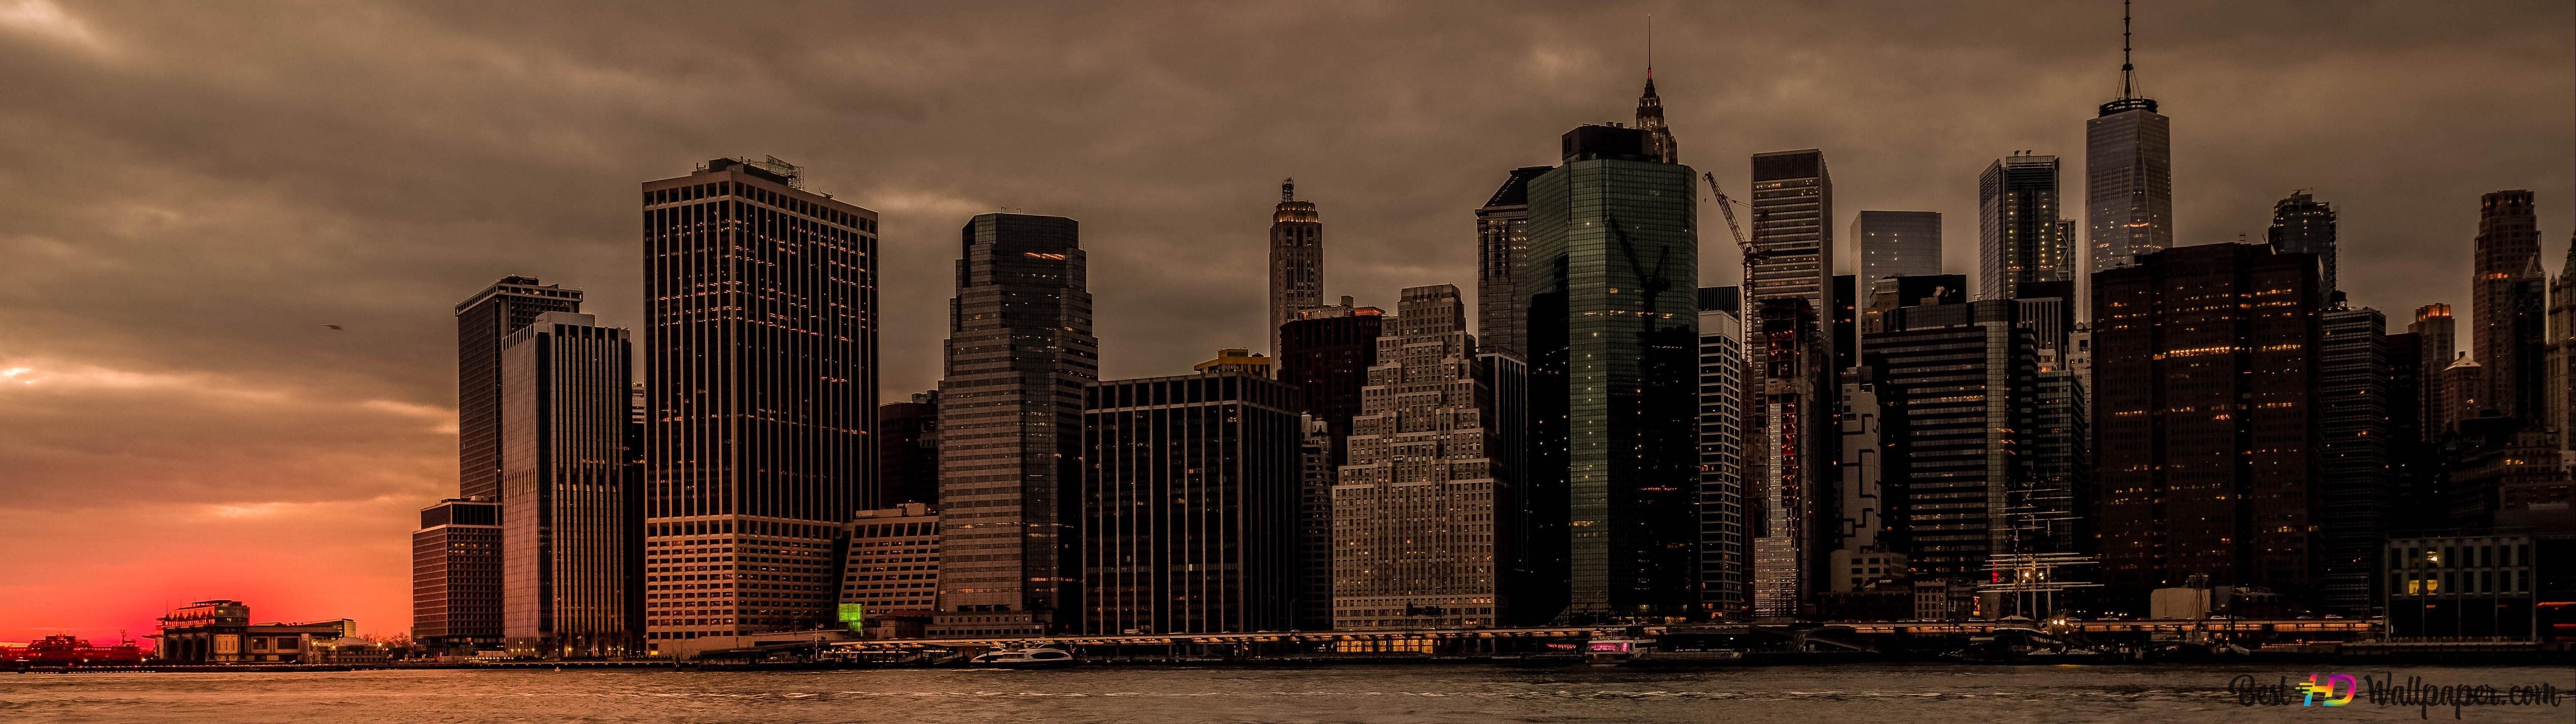 New York City Skyscraper Downtown Evening Time 4K wallpaper download